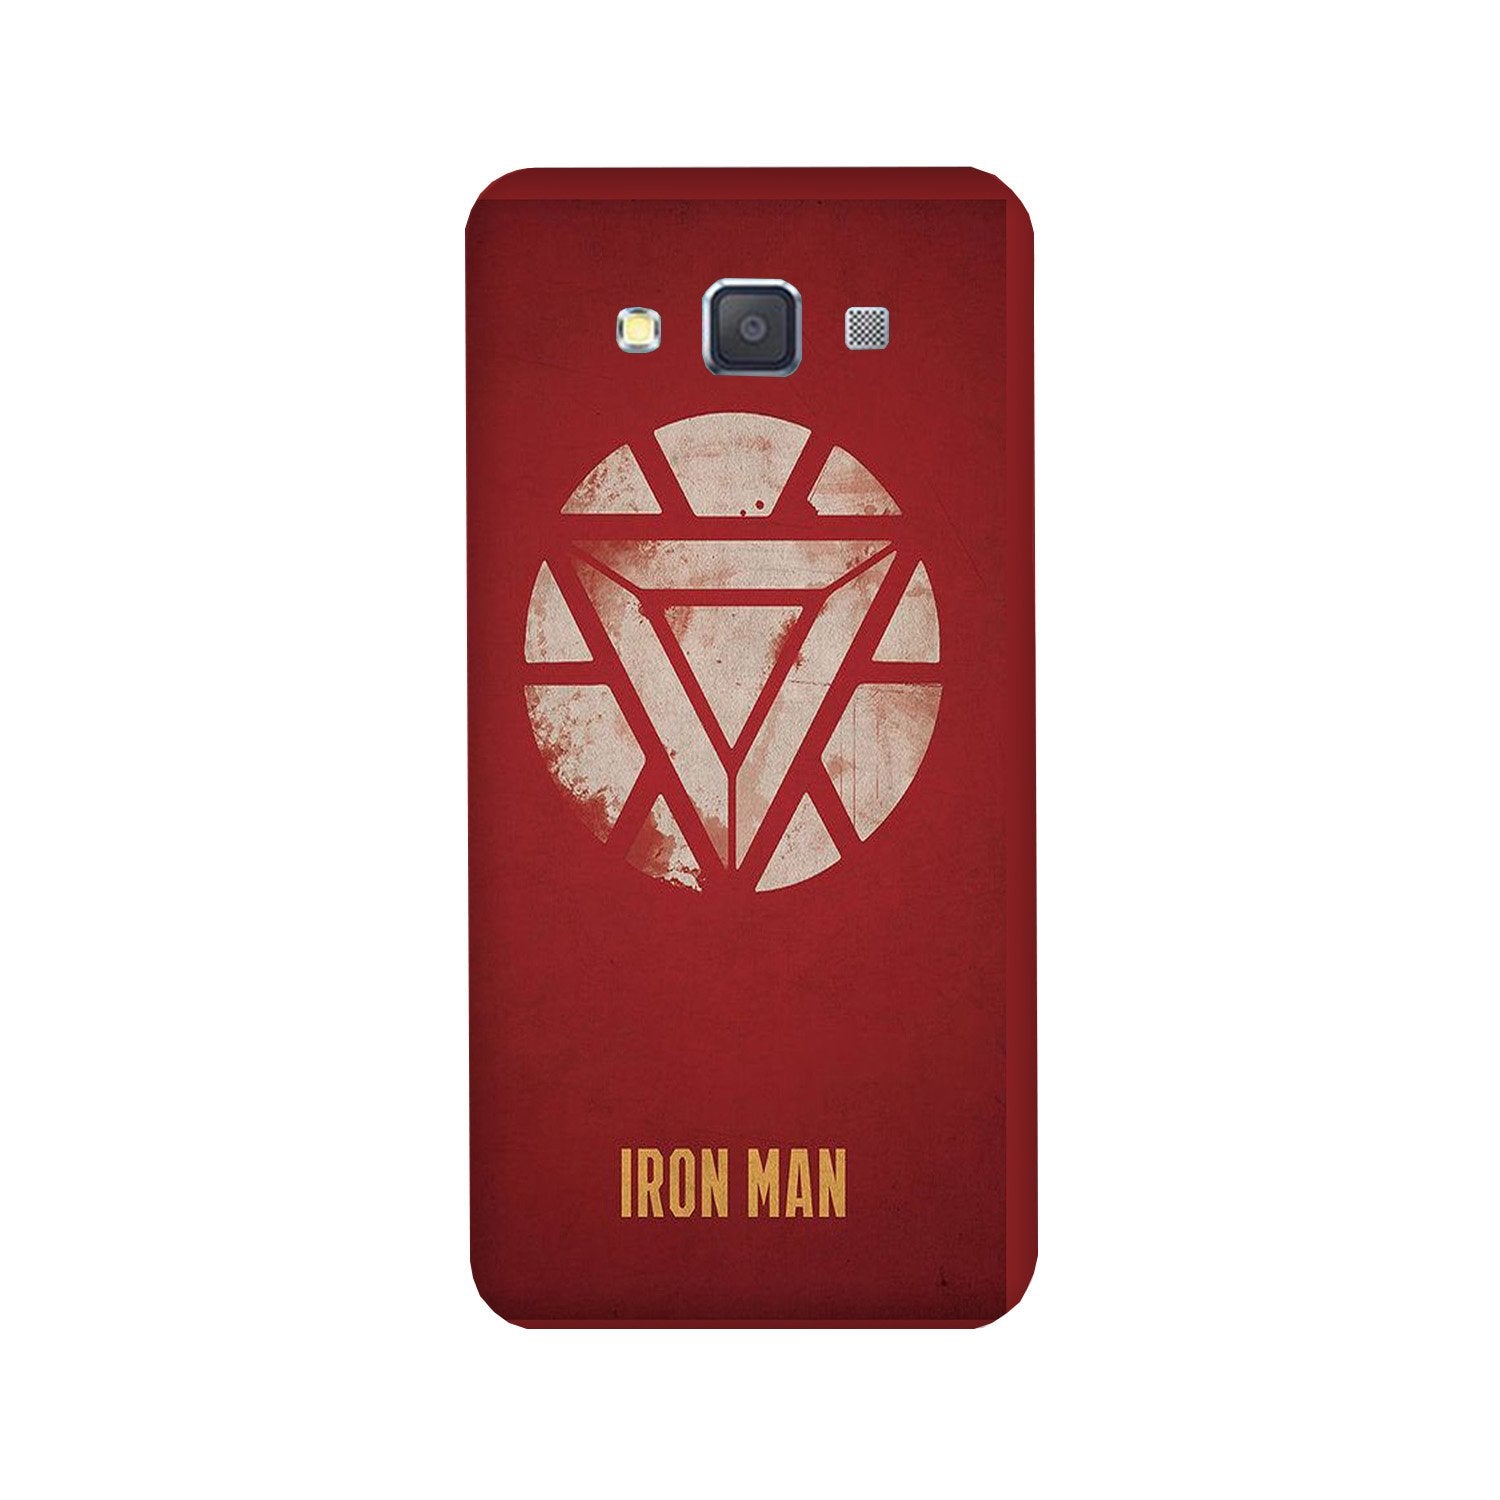 Iron Man Superhero Case for Galaxy Grand Max(Design - 115)